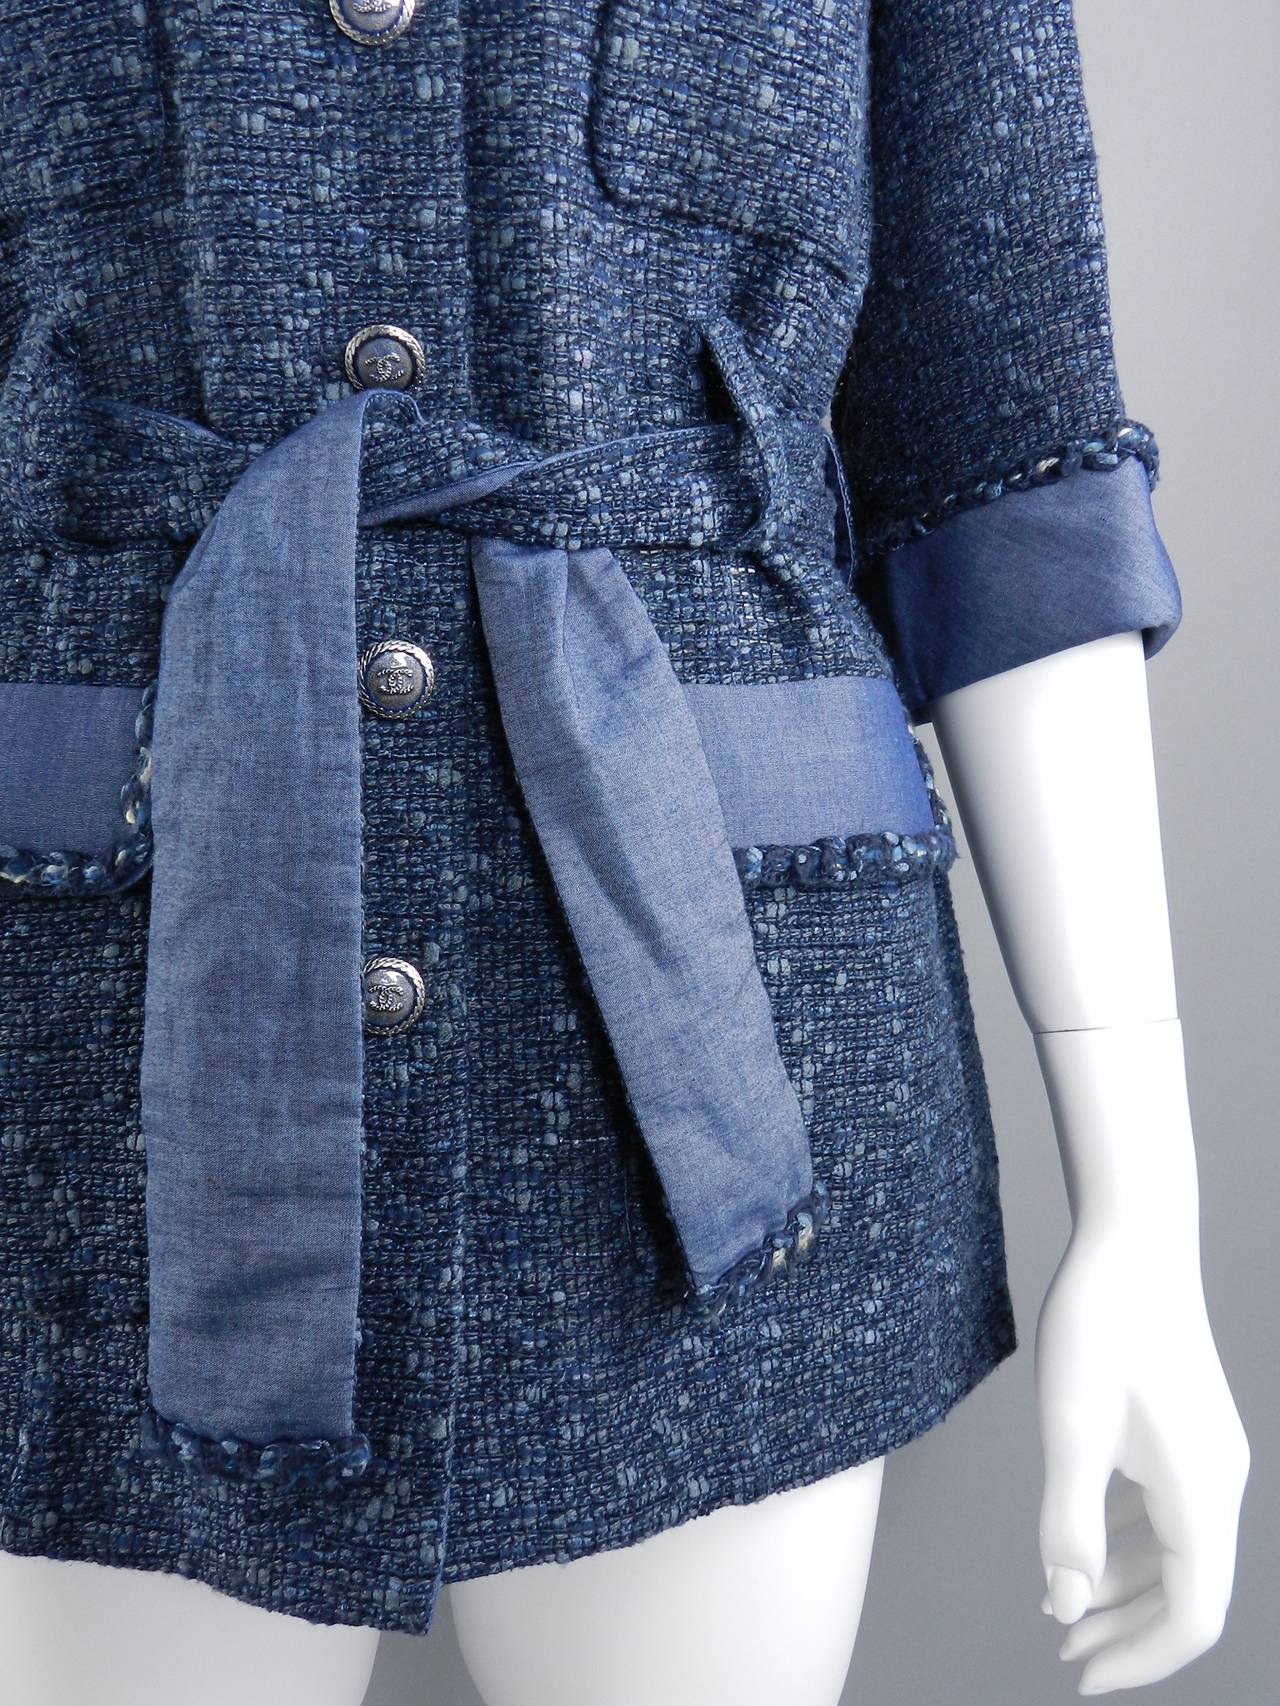 Women's Chanel 12P Denim Blue Jacket with sash belt